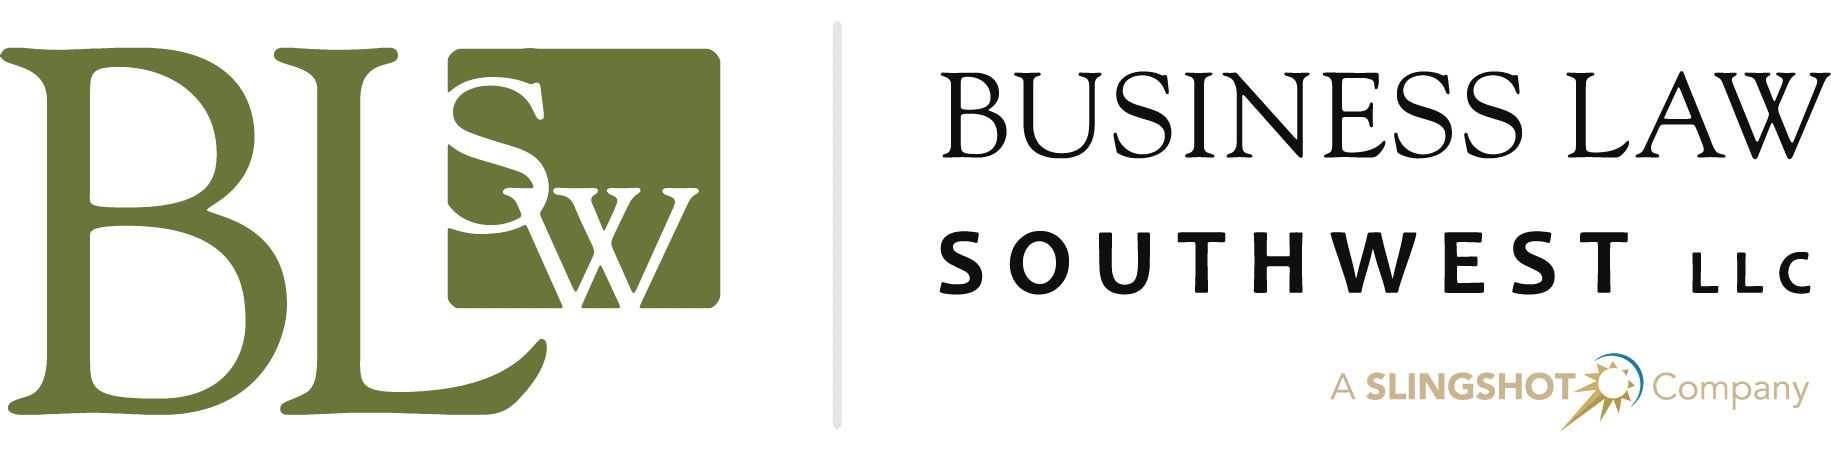 Business Law Southwest, LLC (BLSW)